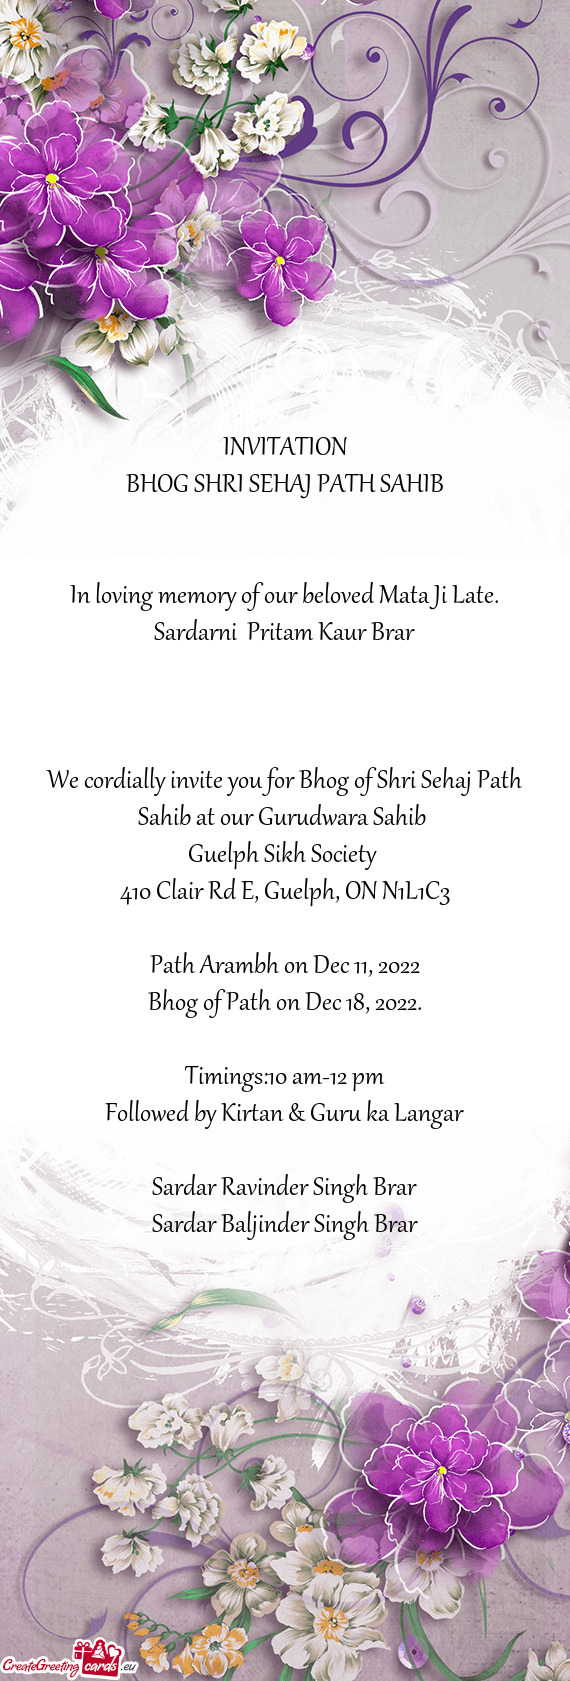 In loving memory of our beloved Mata Ji Late. Sardarni Pritam Kaur Brar